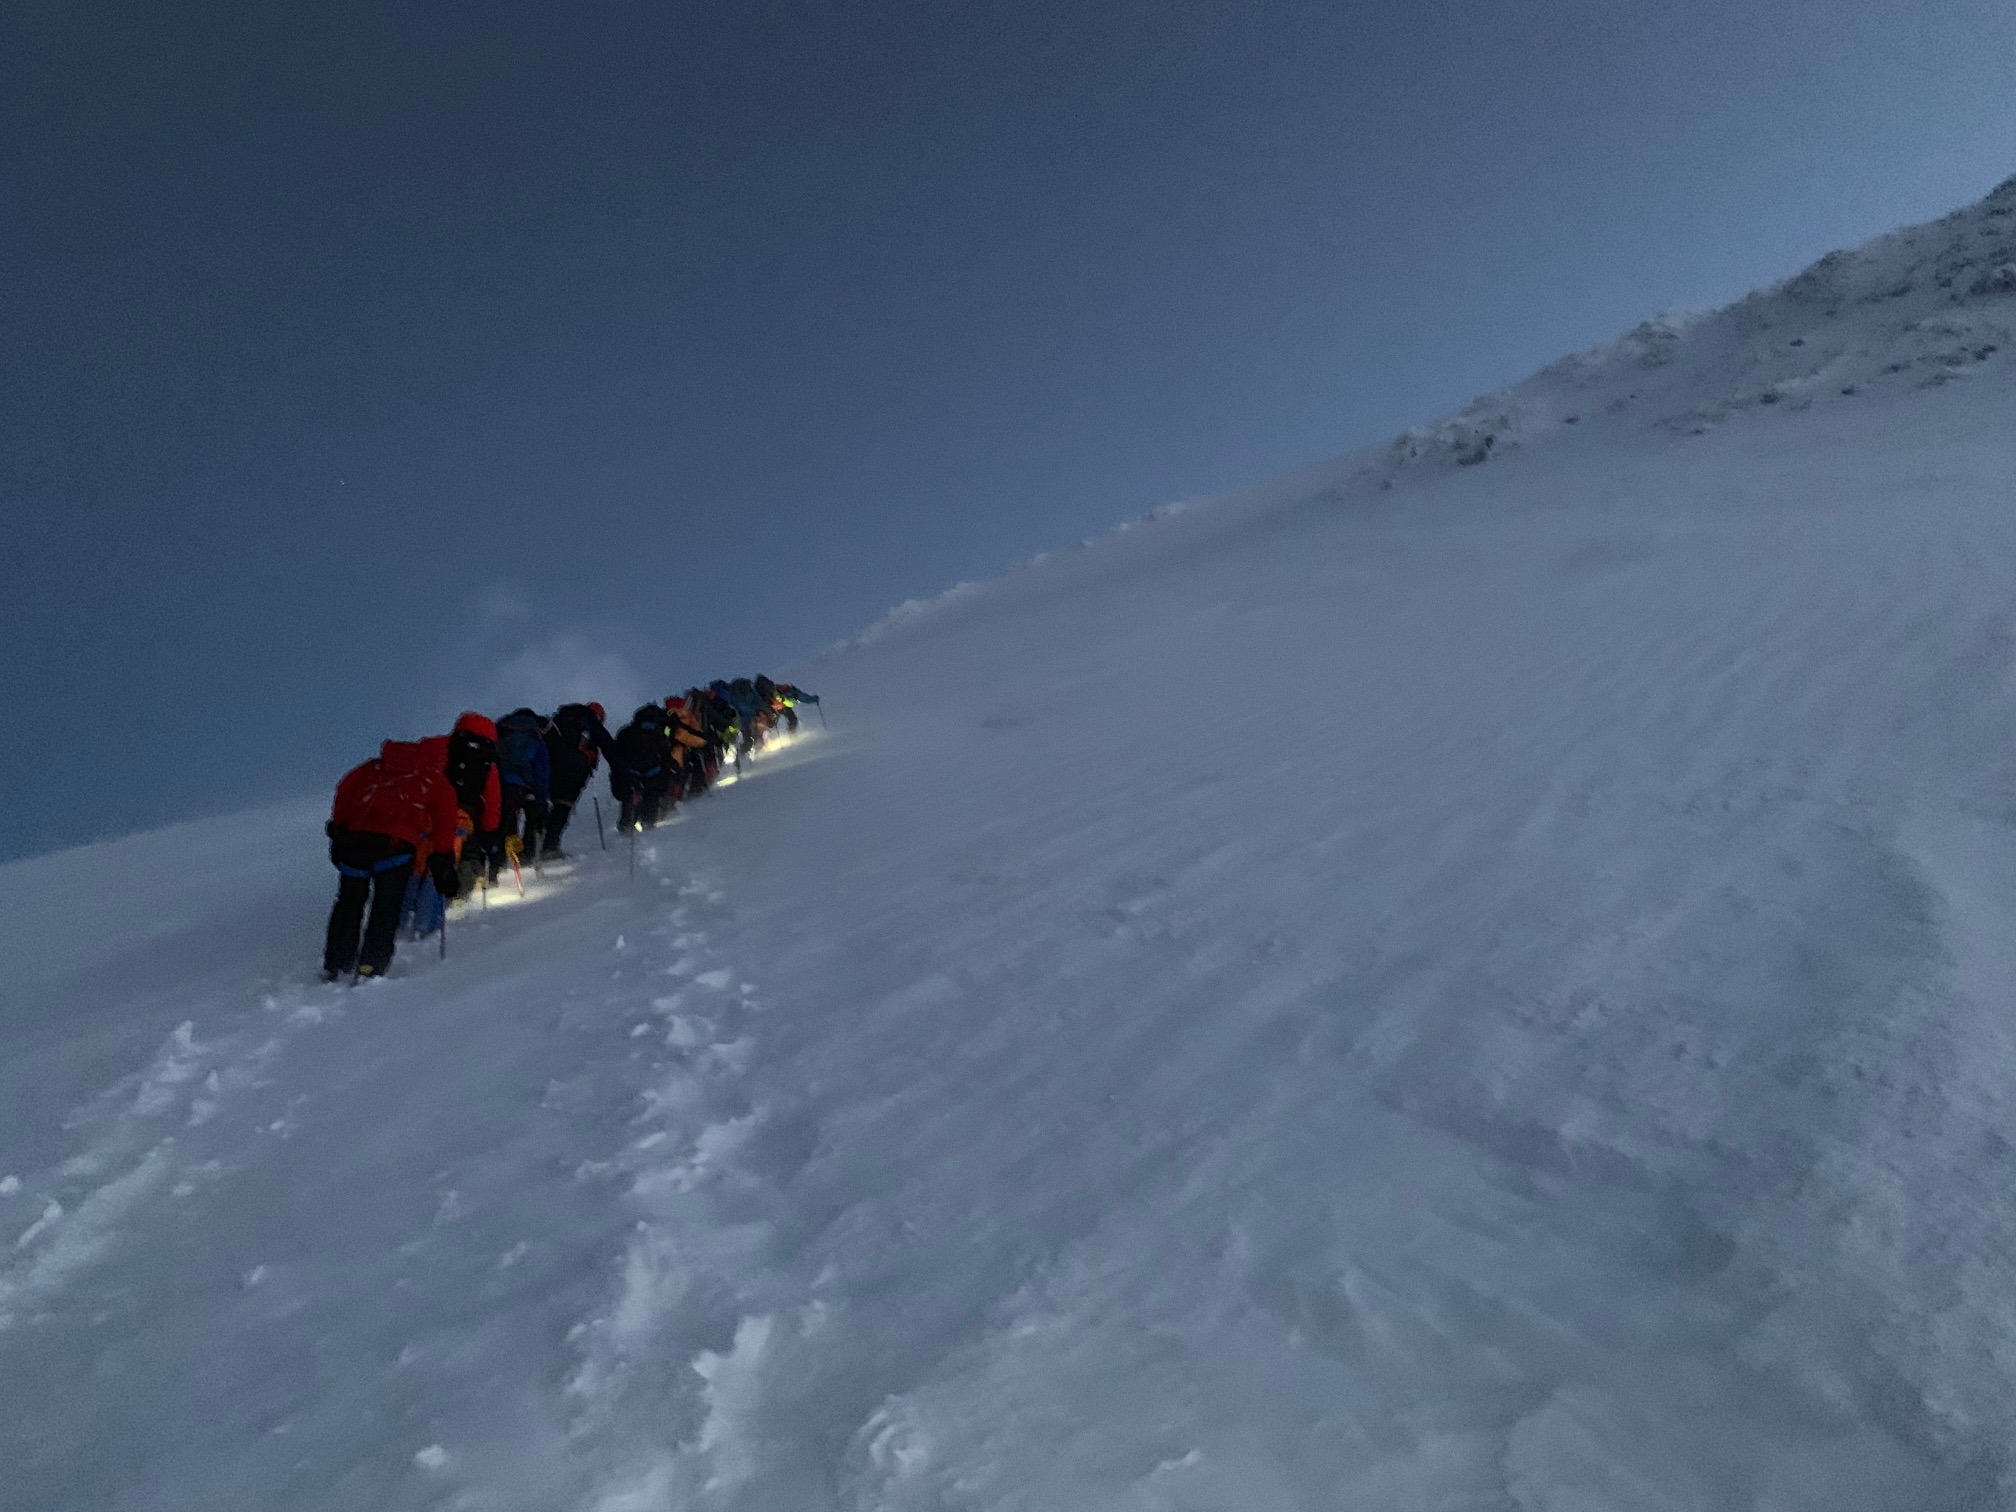 The slopes of Mount Elbrus